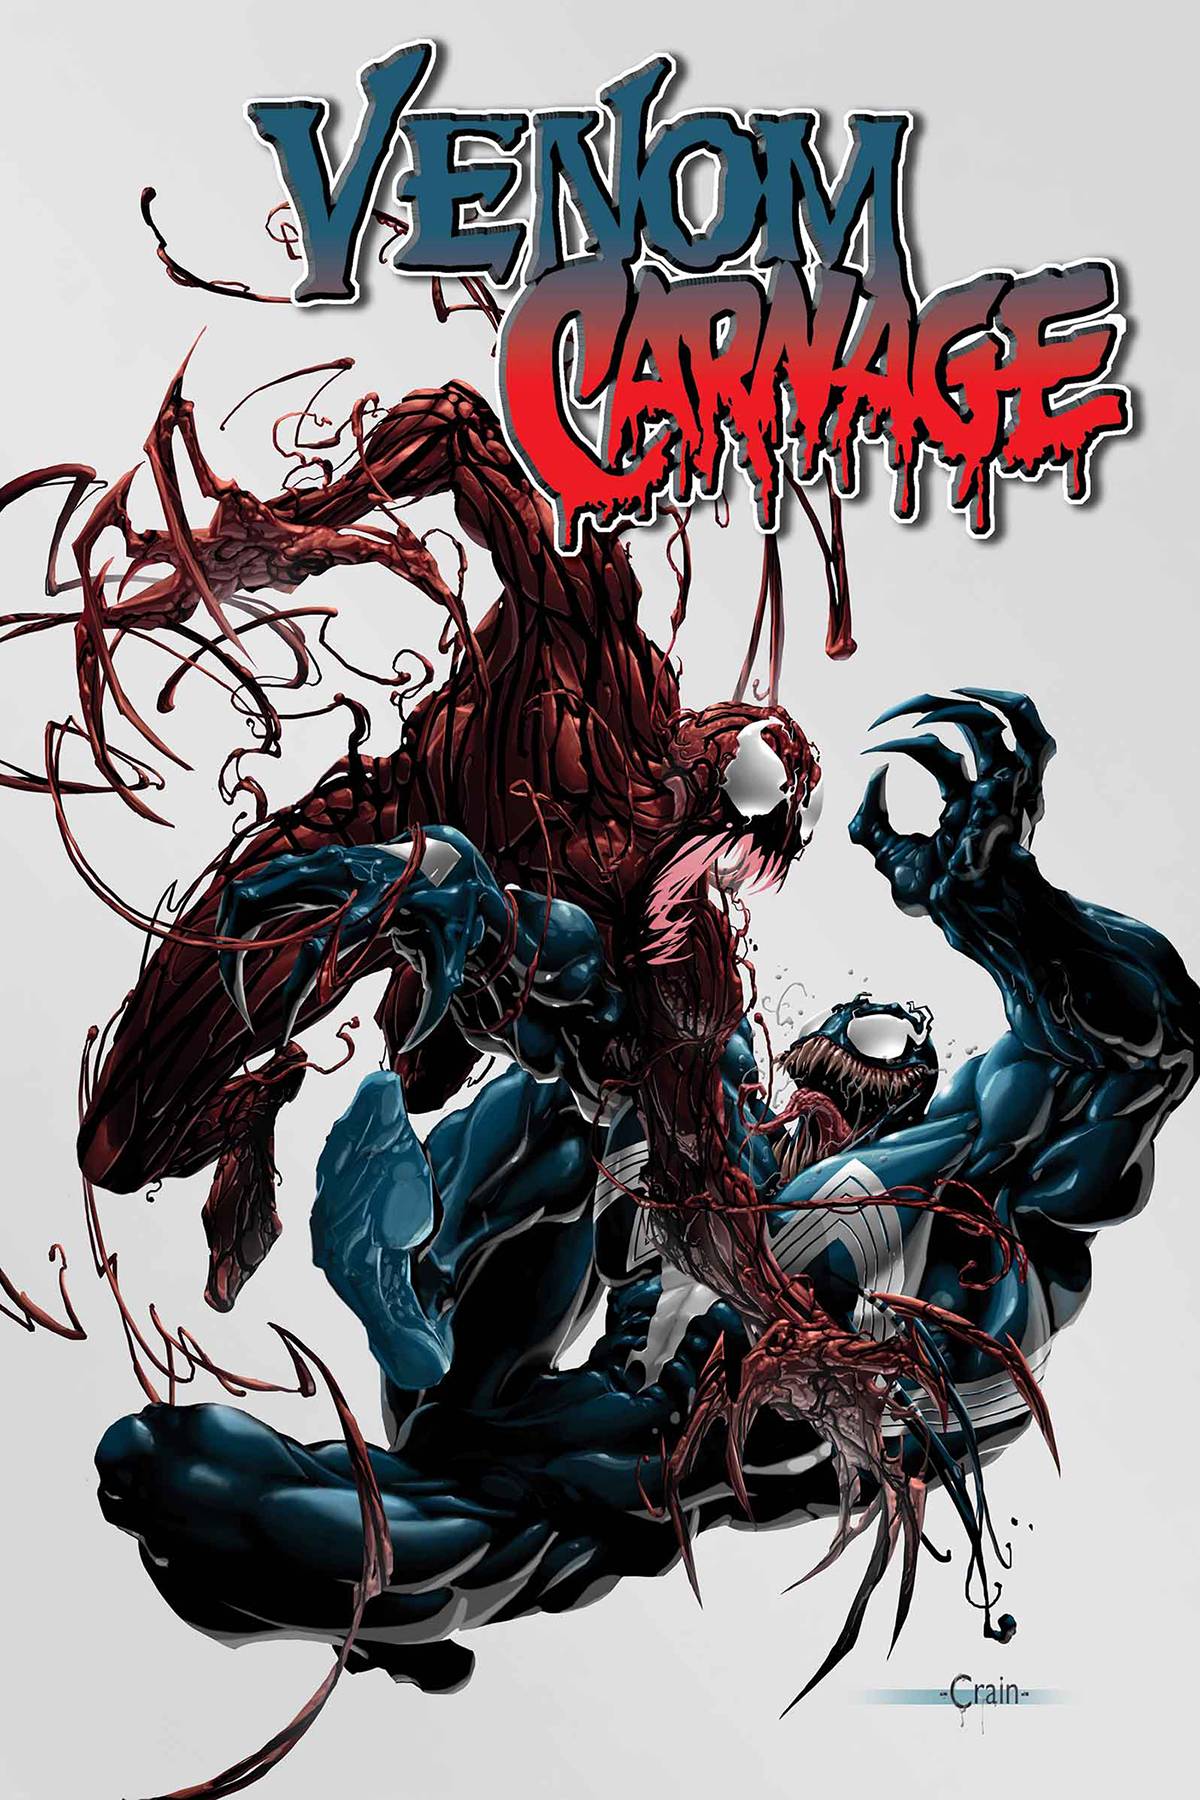 True Believers Absolute Carnage Venom Vs Carnage #1